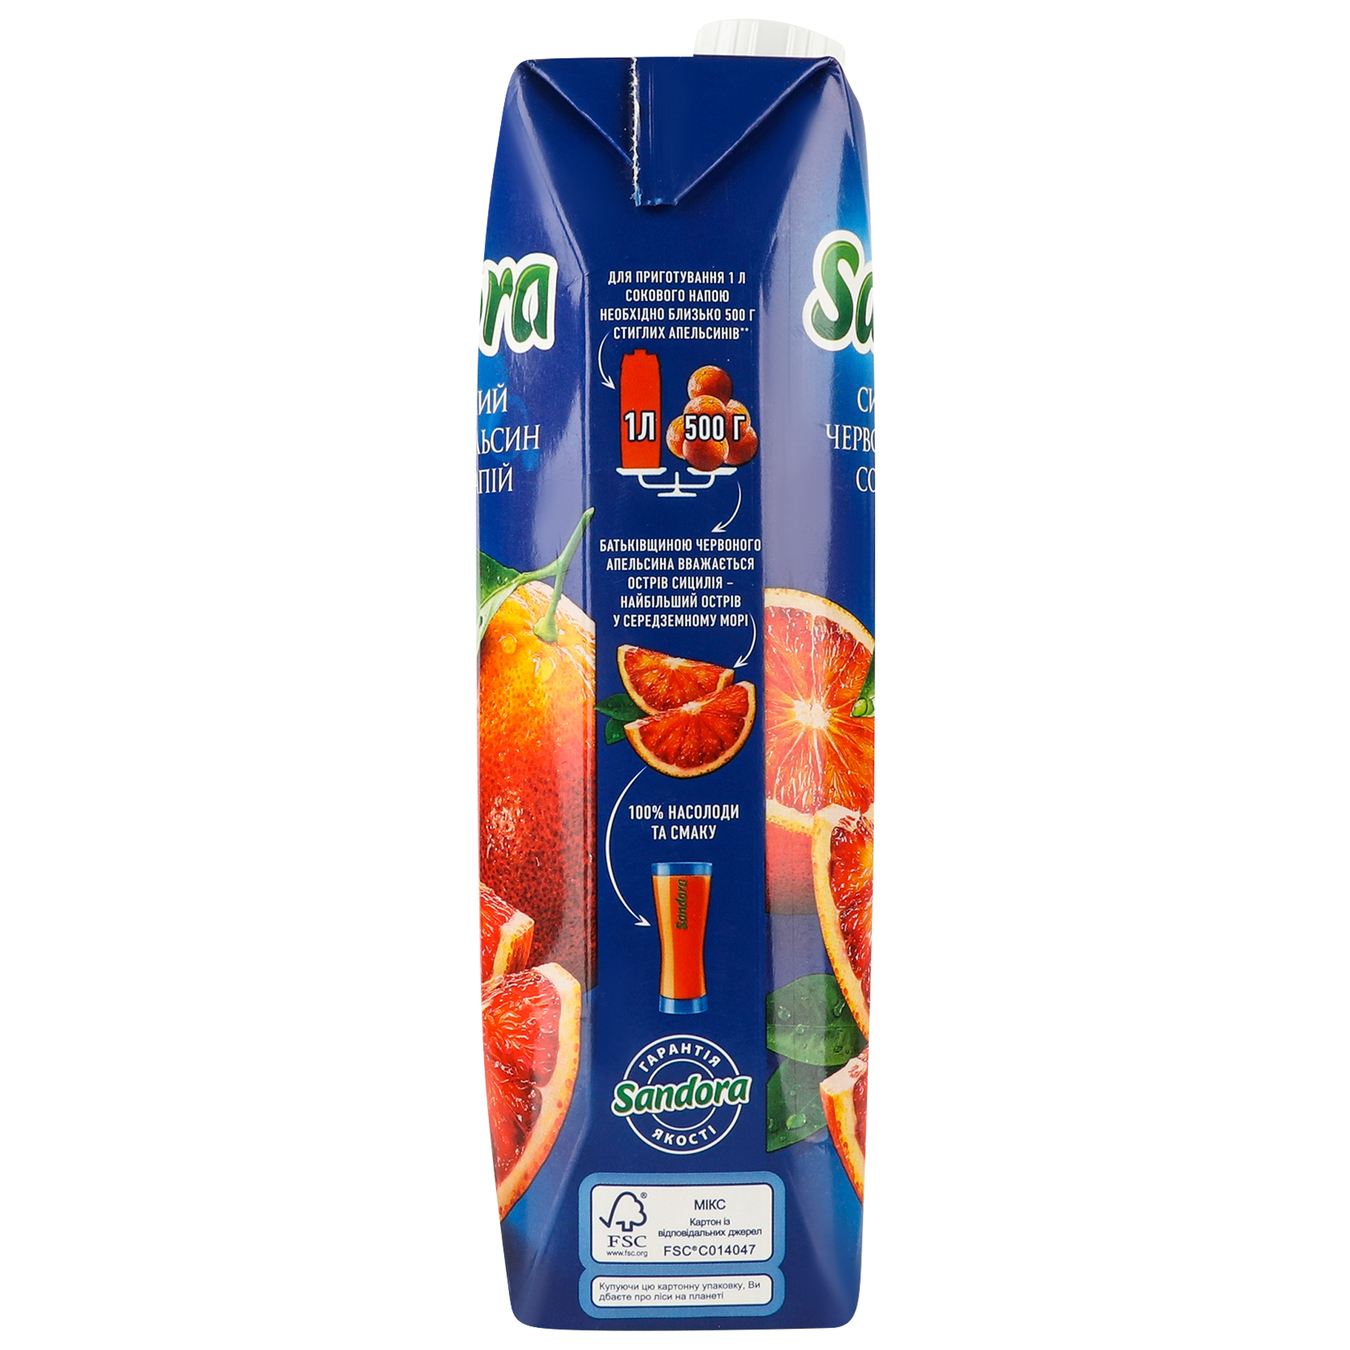 Sandora Sicilian Red Orange Juice Drink 950ml 5